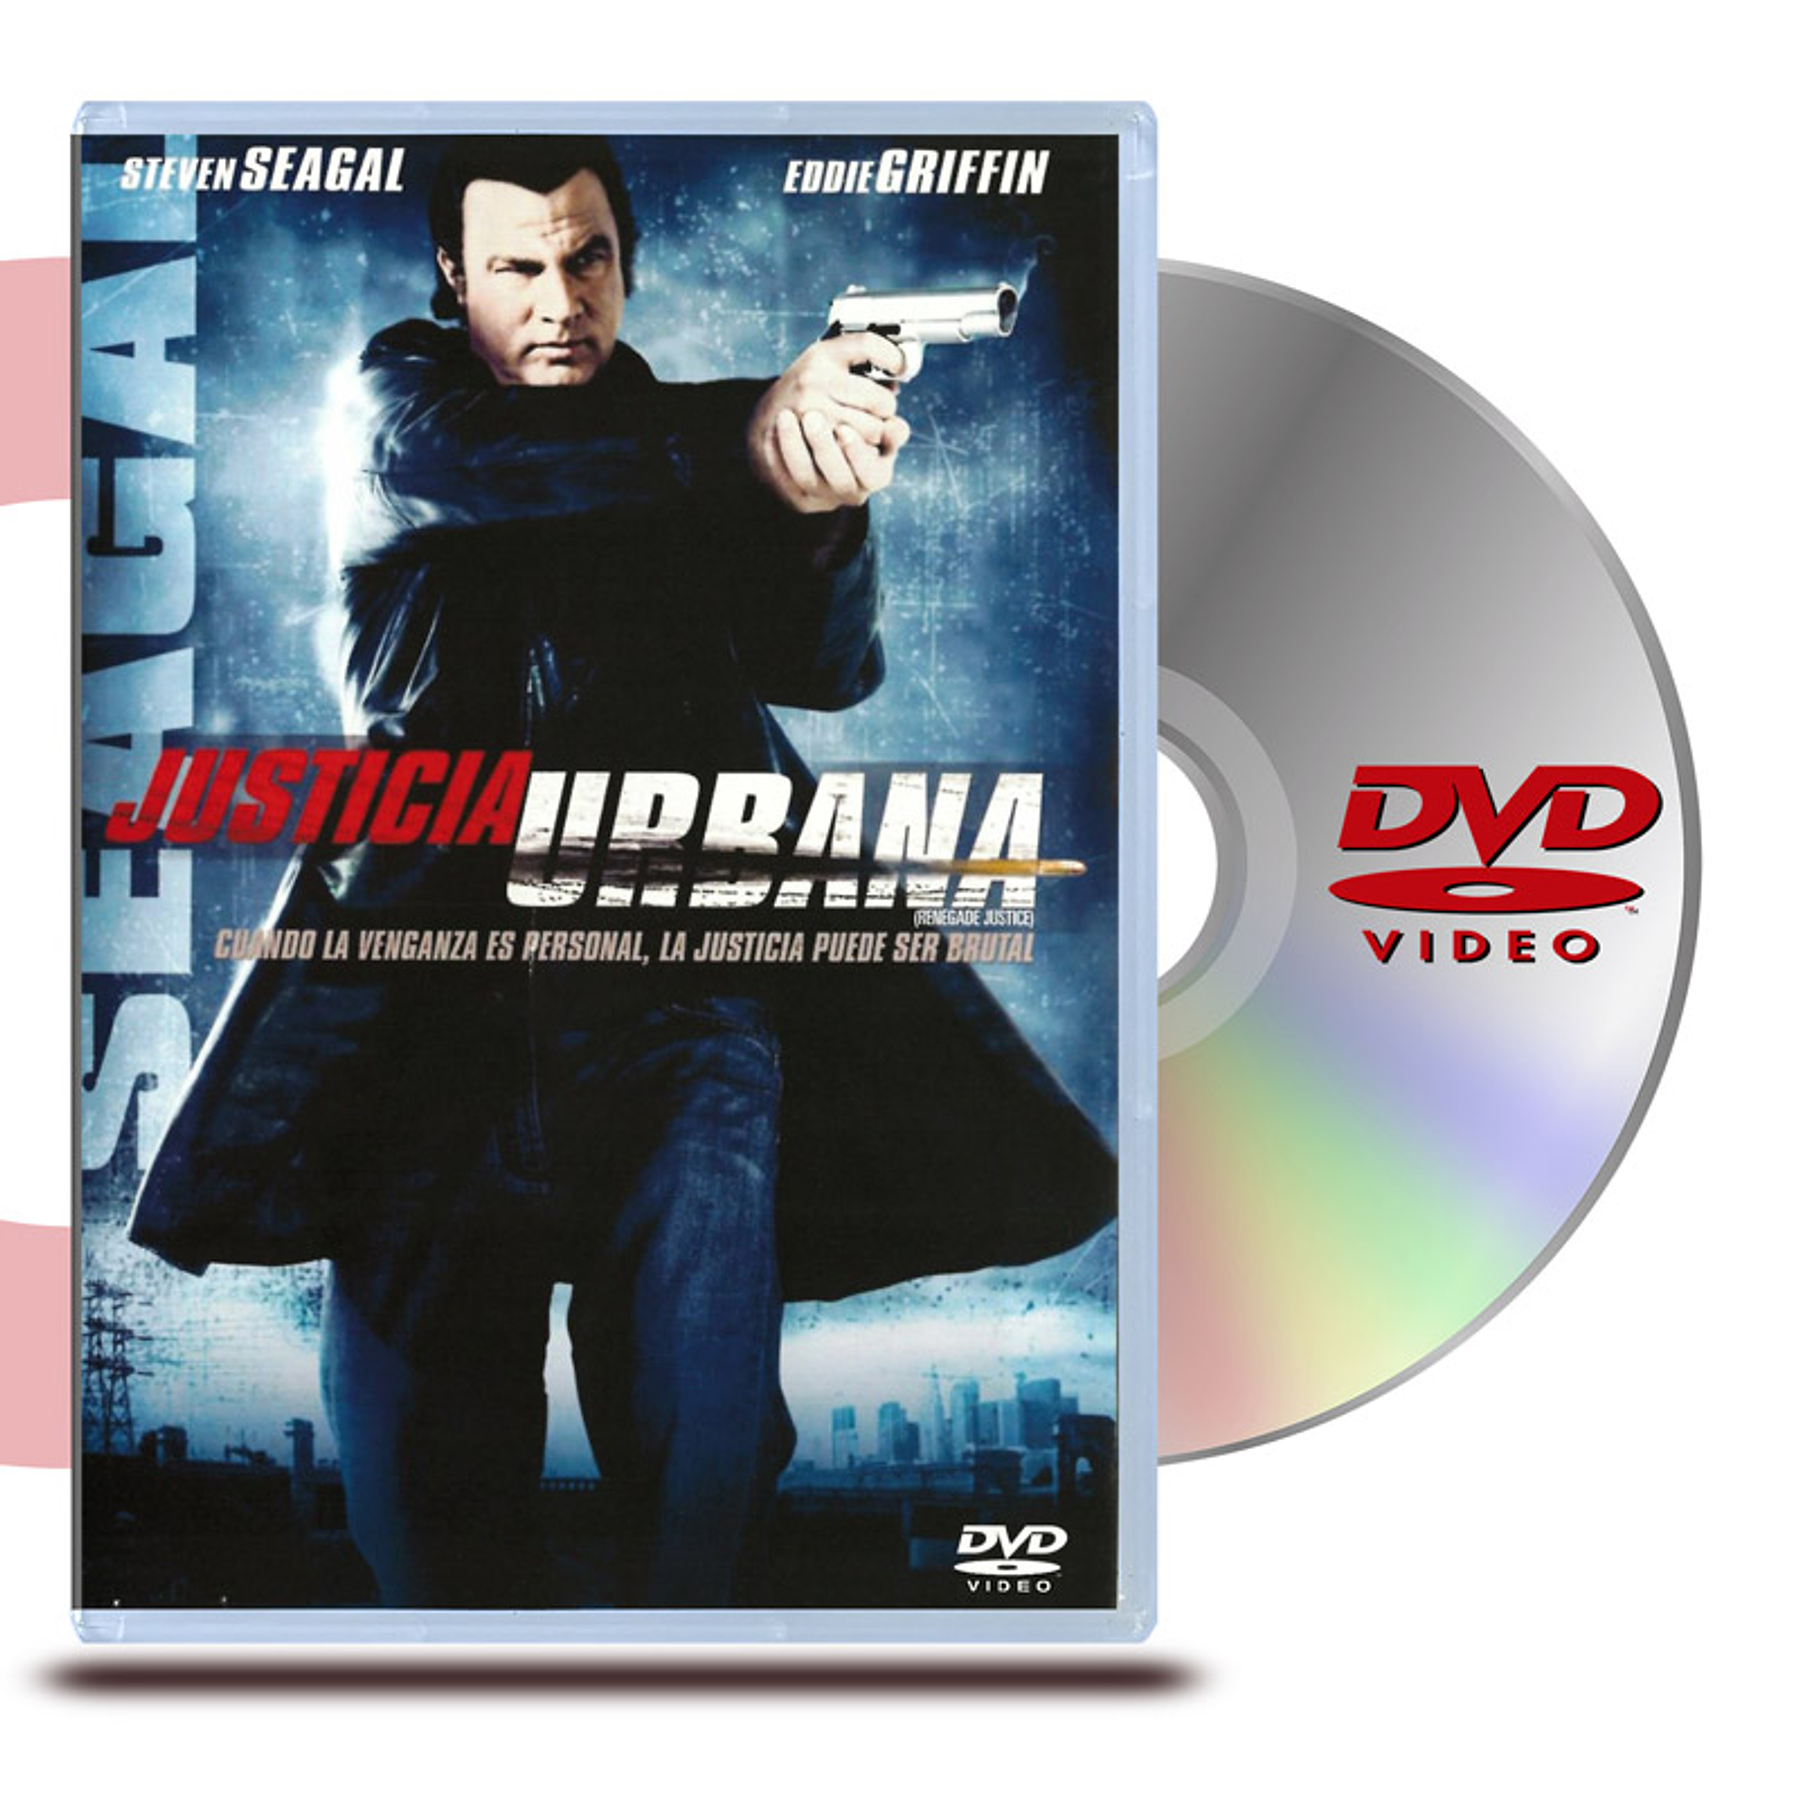 DVD Justicia Urbana